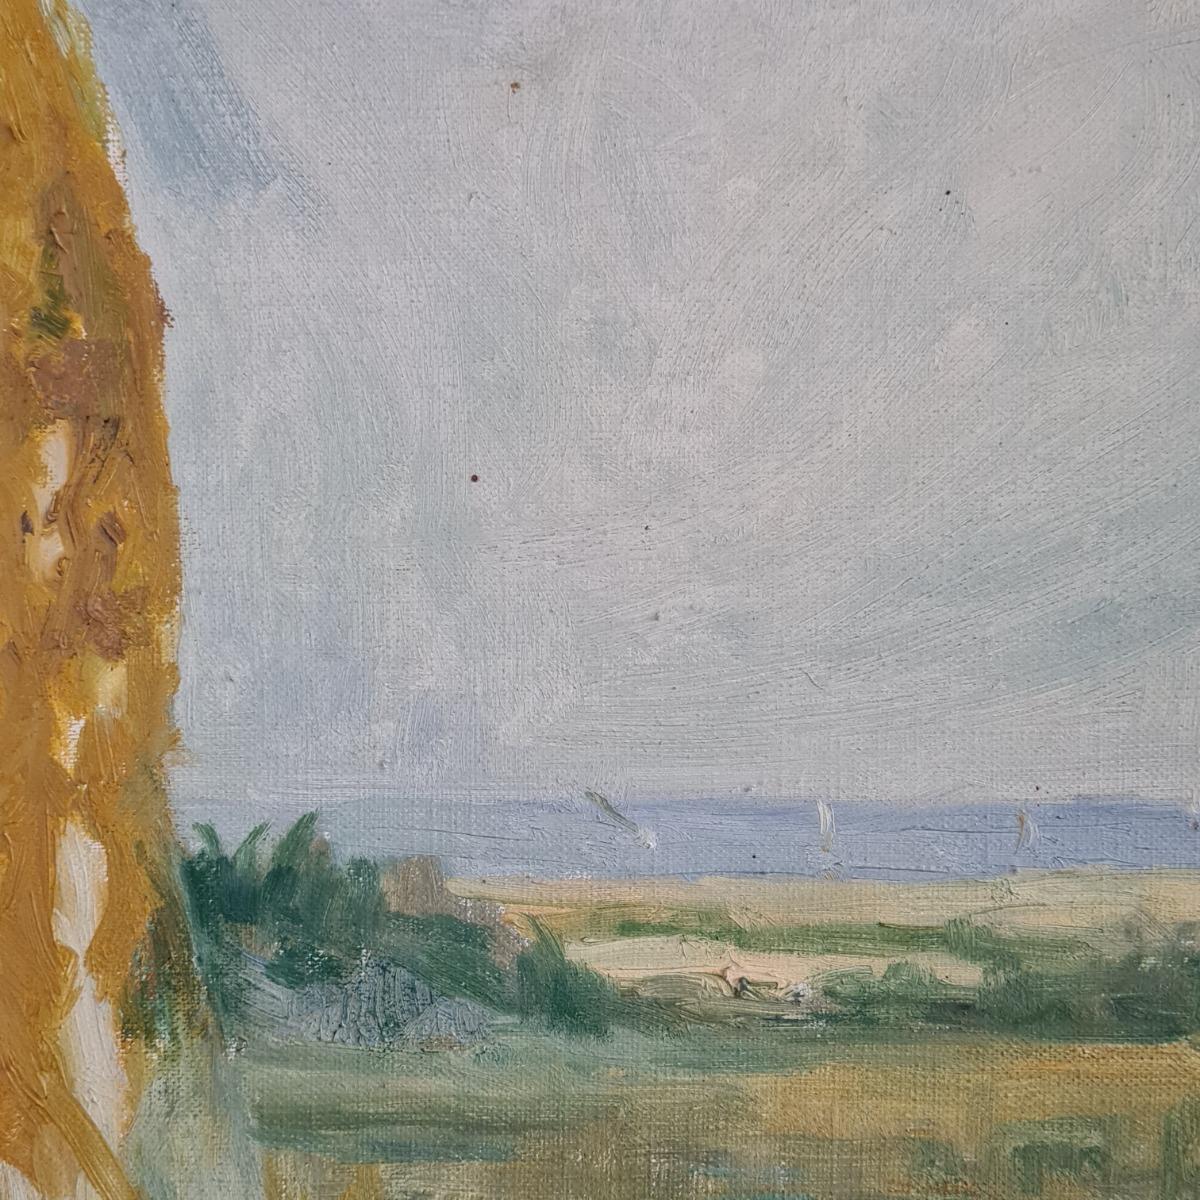 Painting of a Menhir